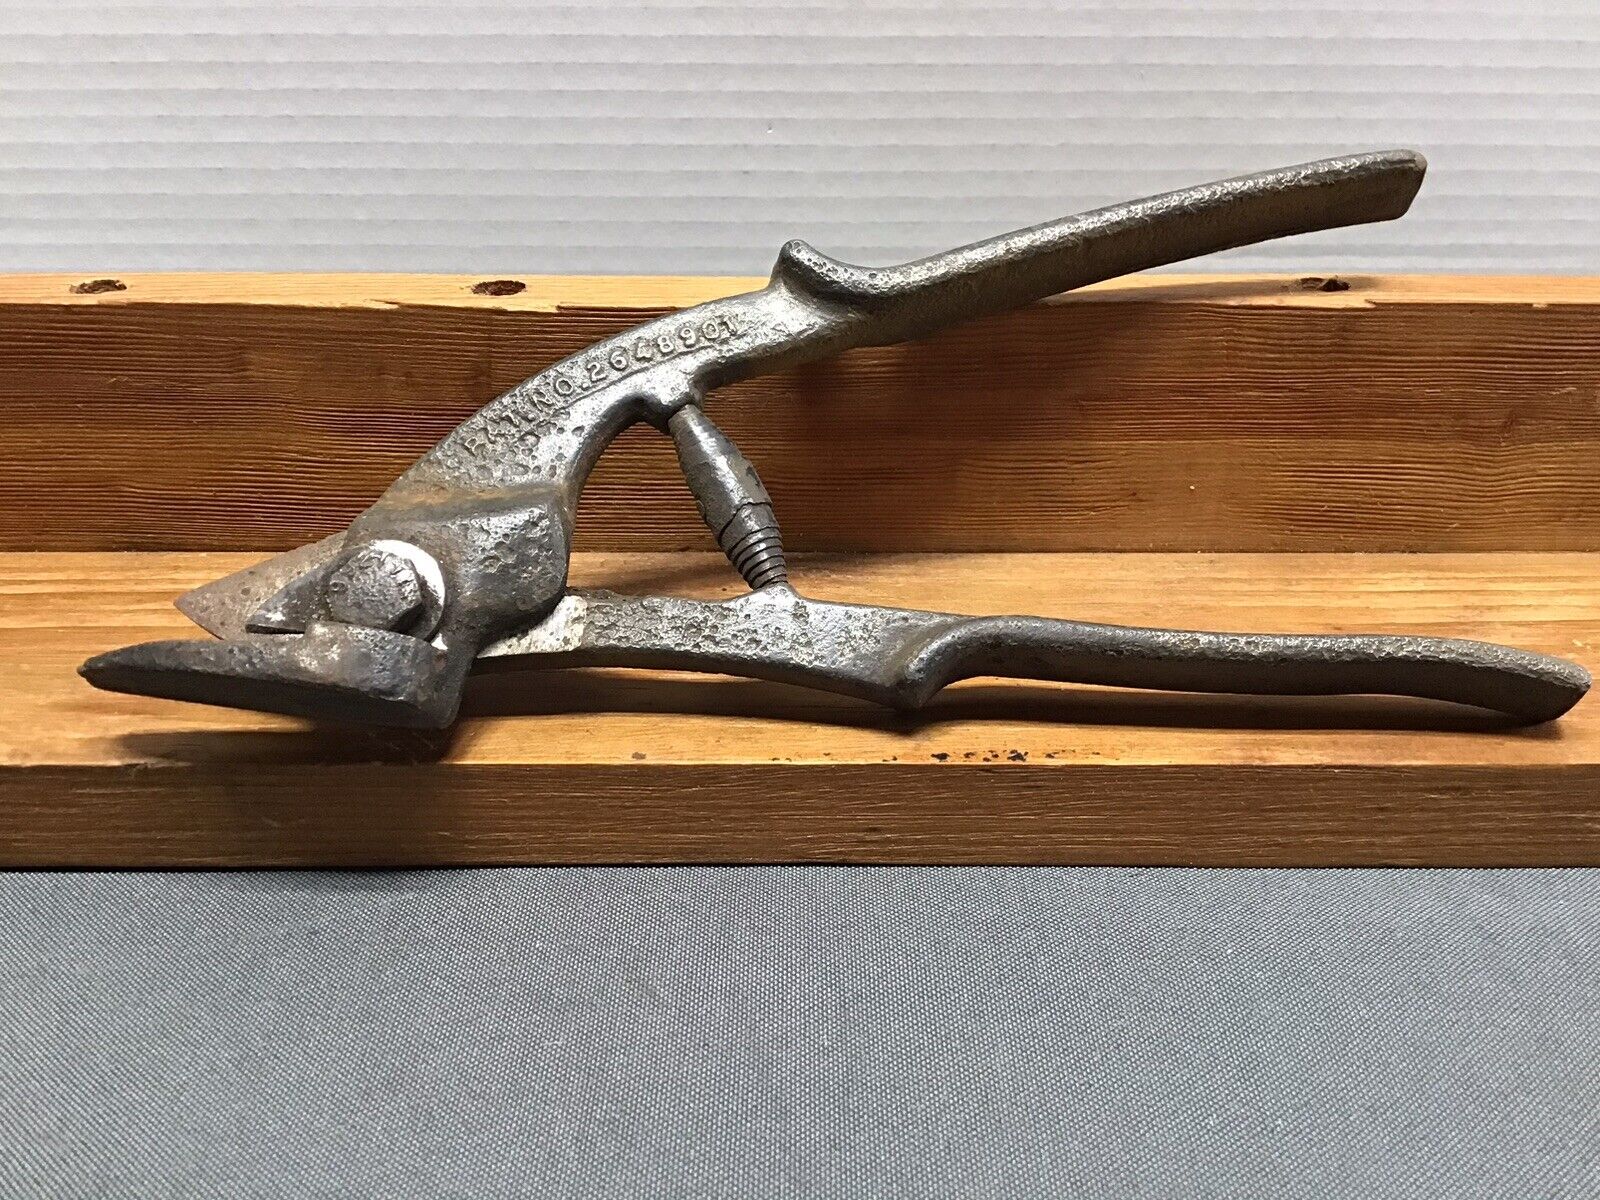 Antique Metal Strap Cutter Pat (2648901)